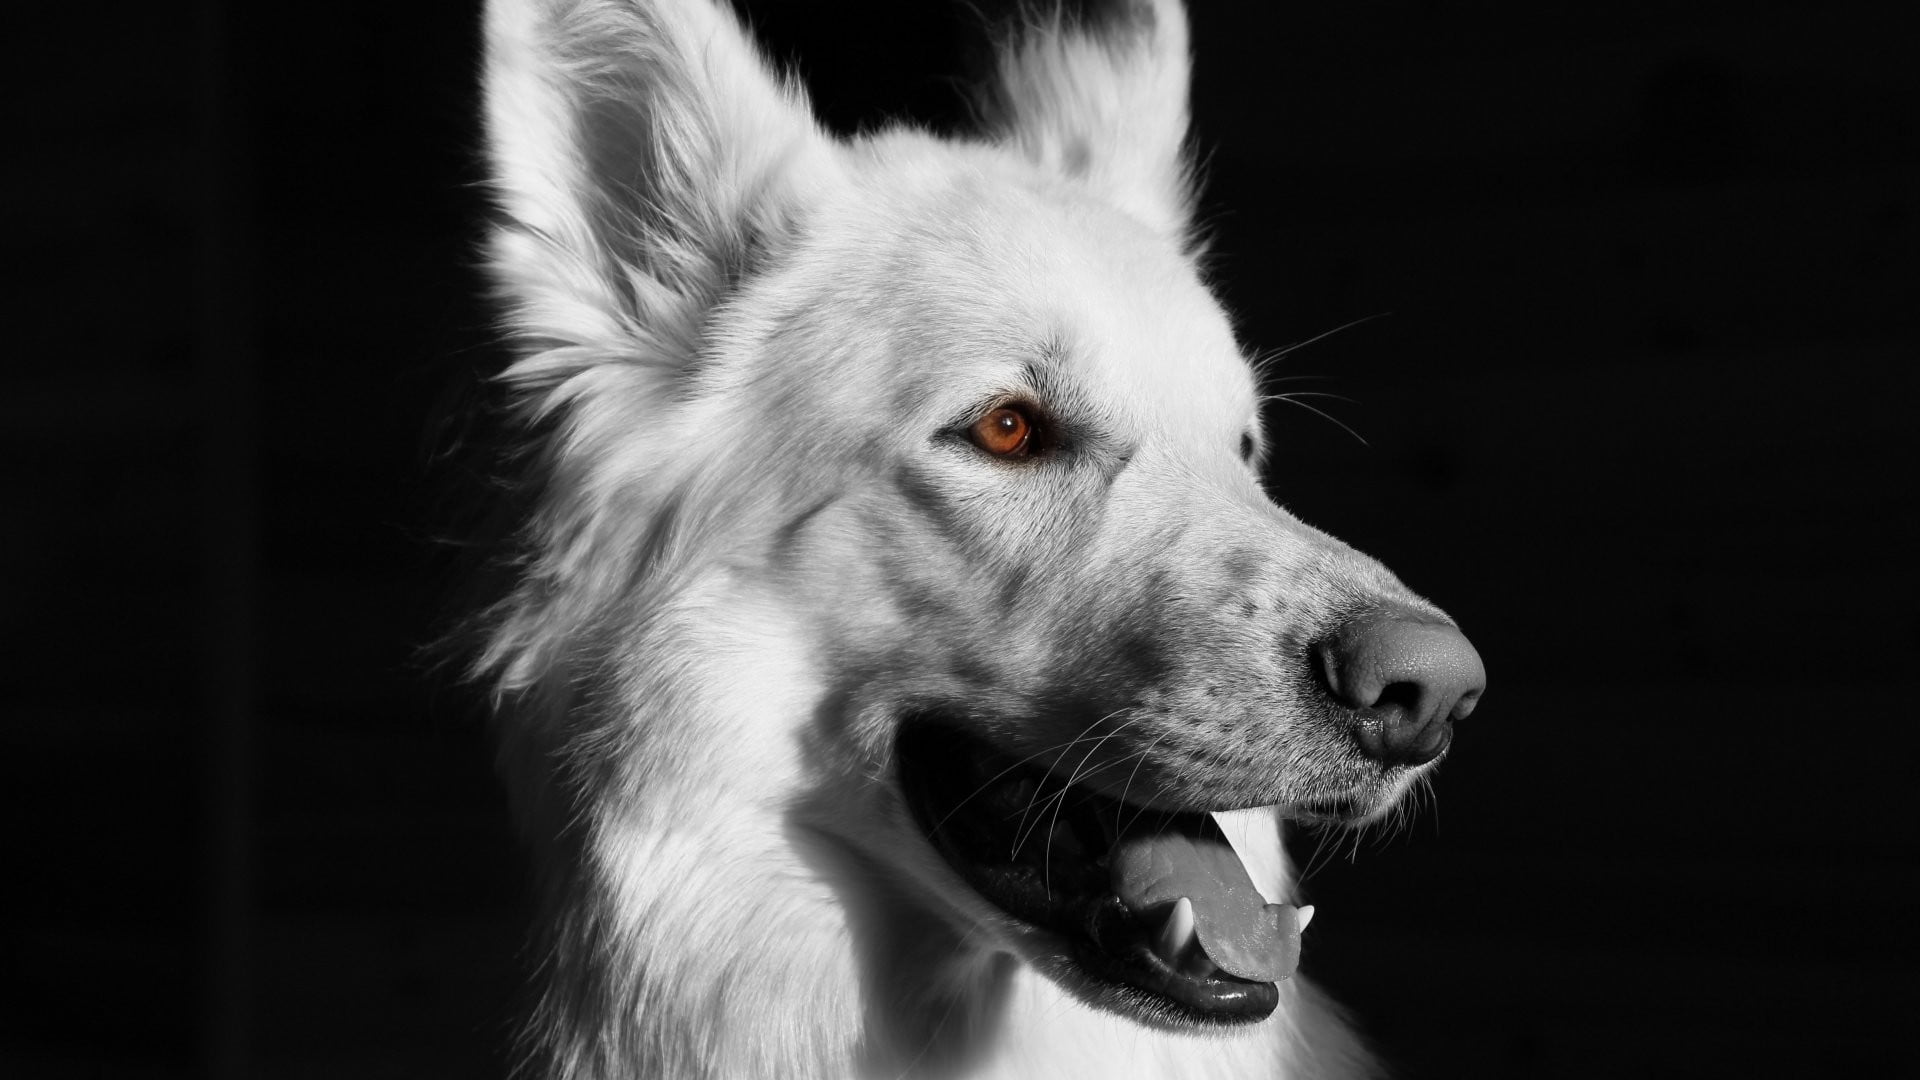 grayscale photo of animal, dog, one animal, mammal, animal themes